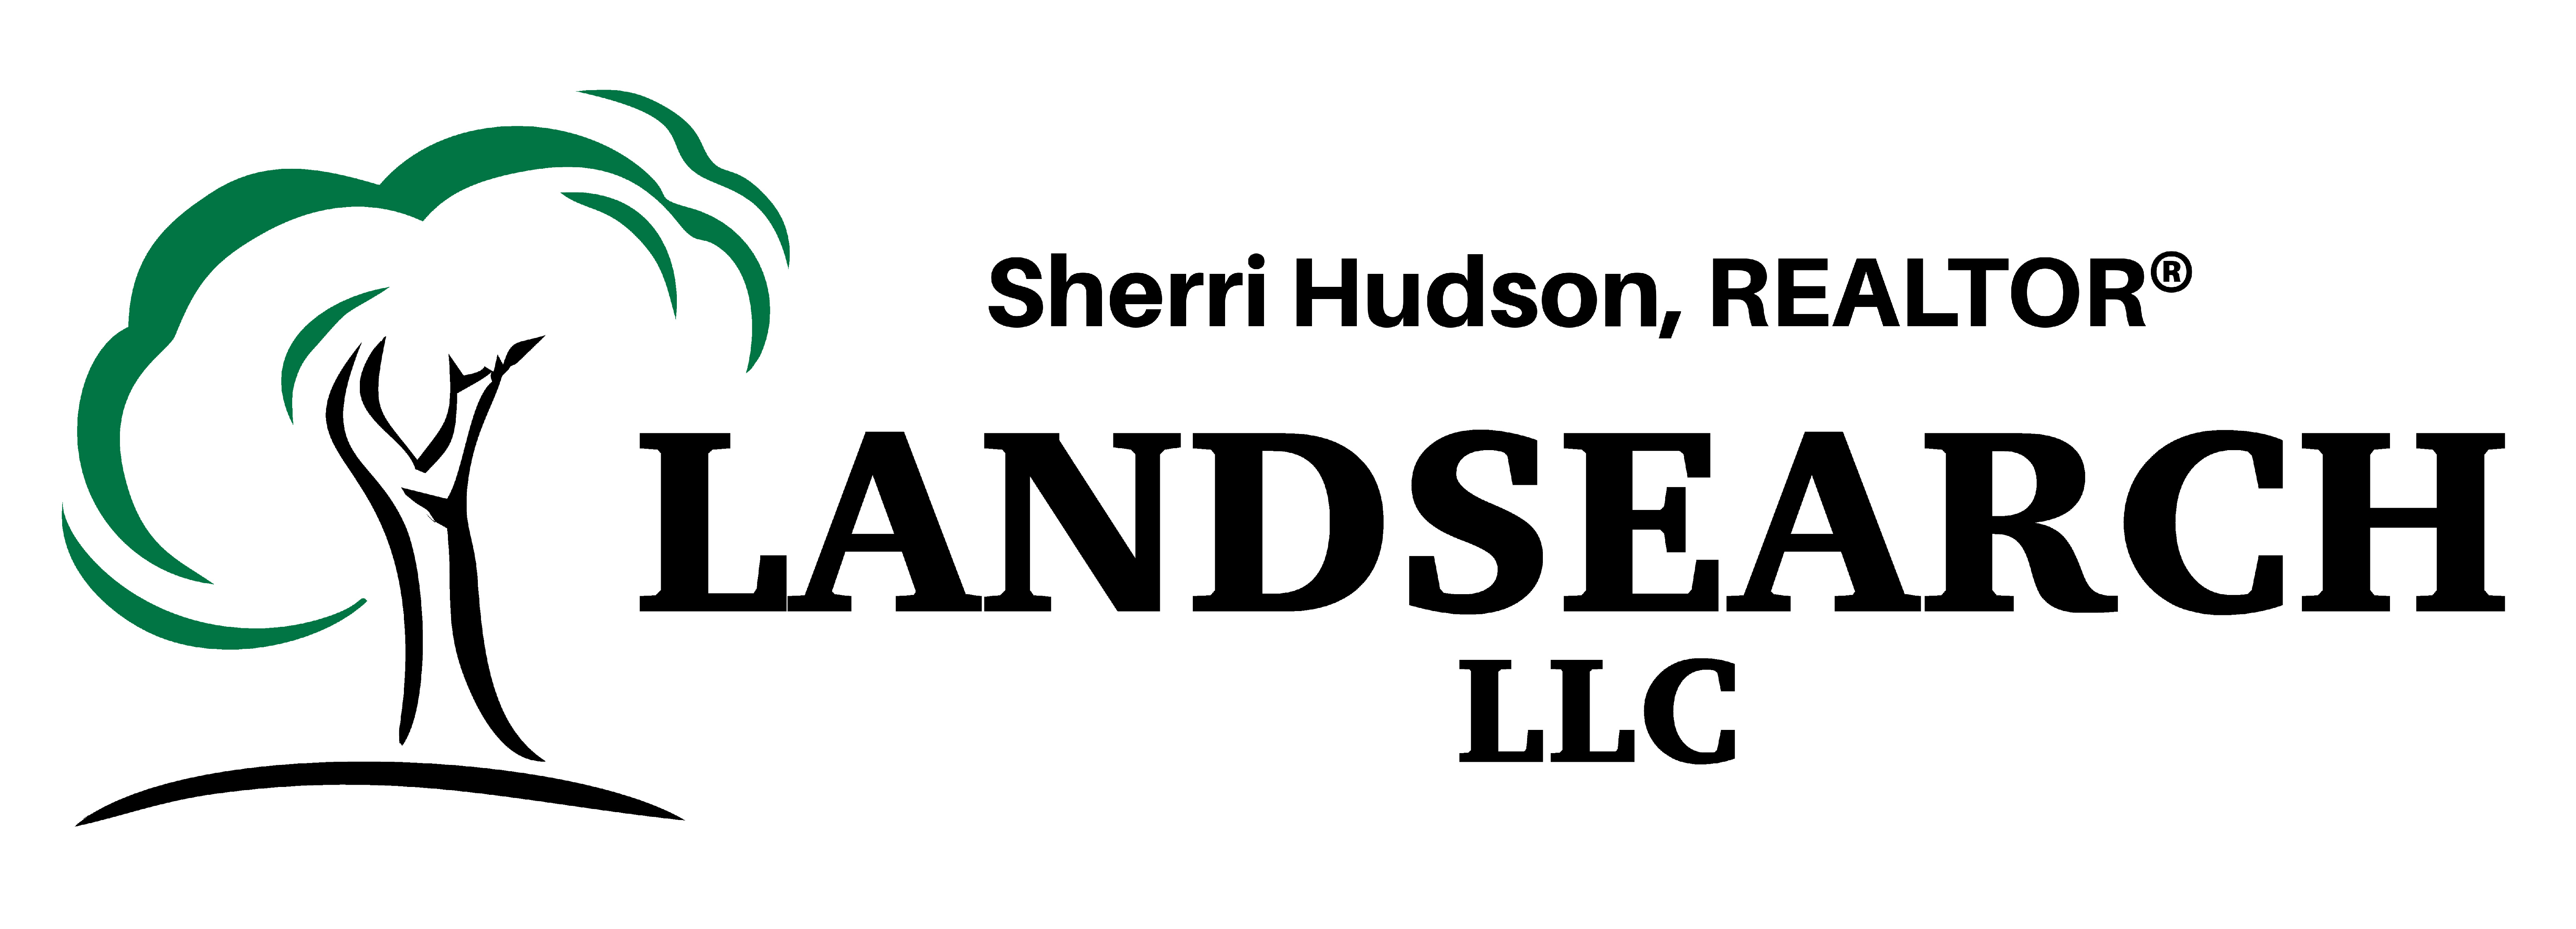 Landsearch LLC - Sherri Hudson